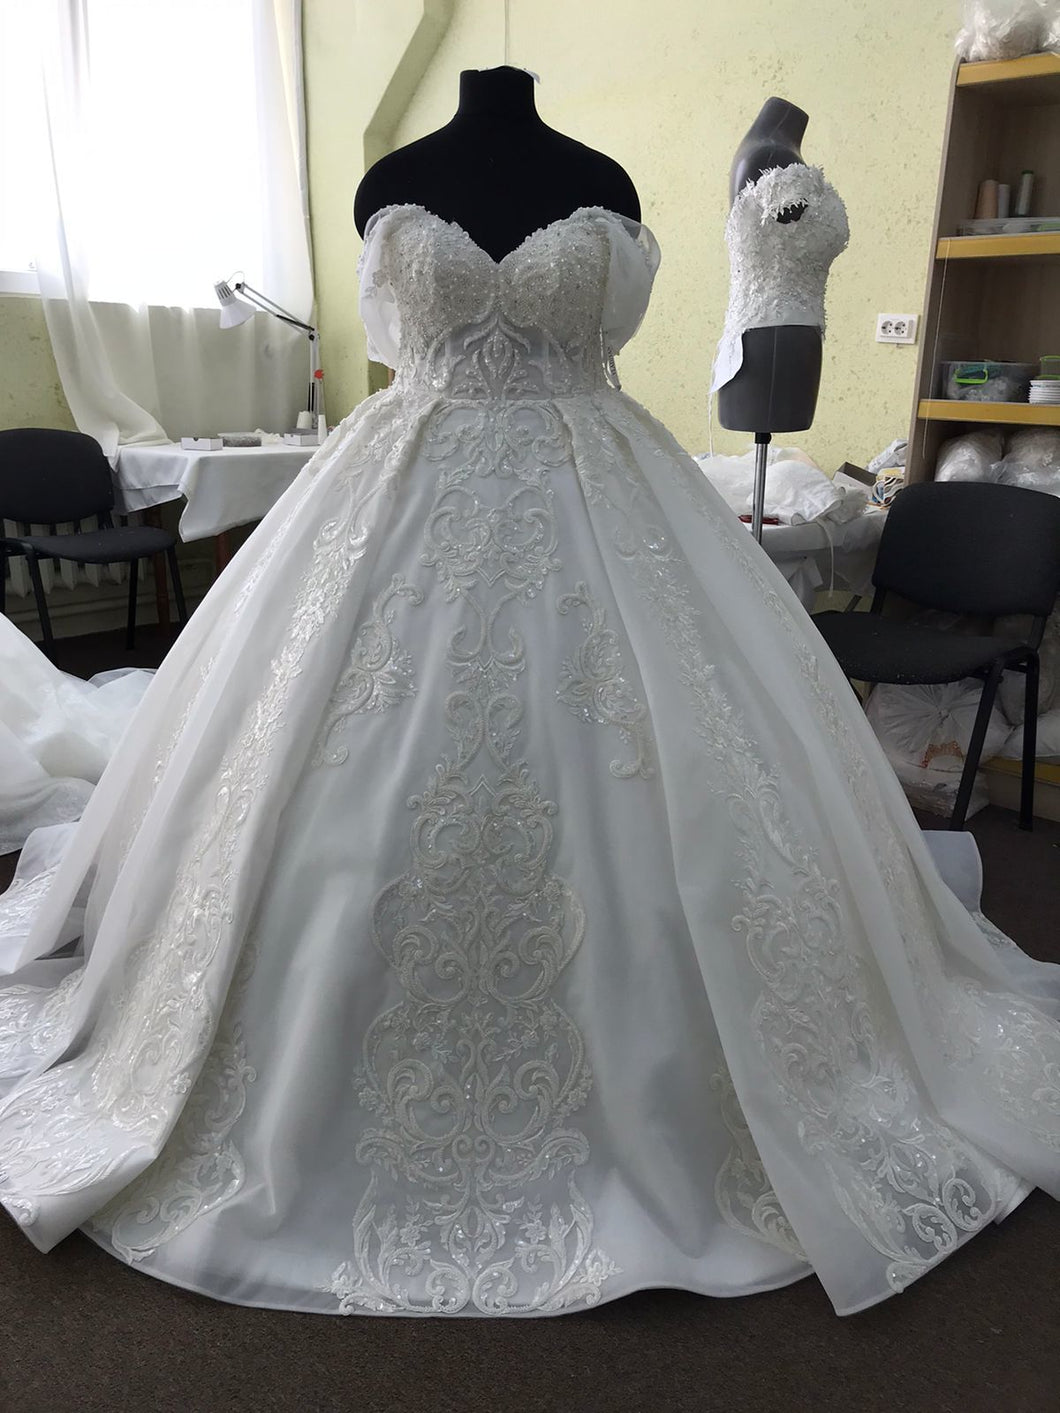 Vladiyan  'Ballgown' wedding dress size-10 NEW